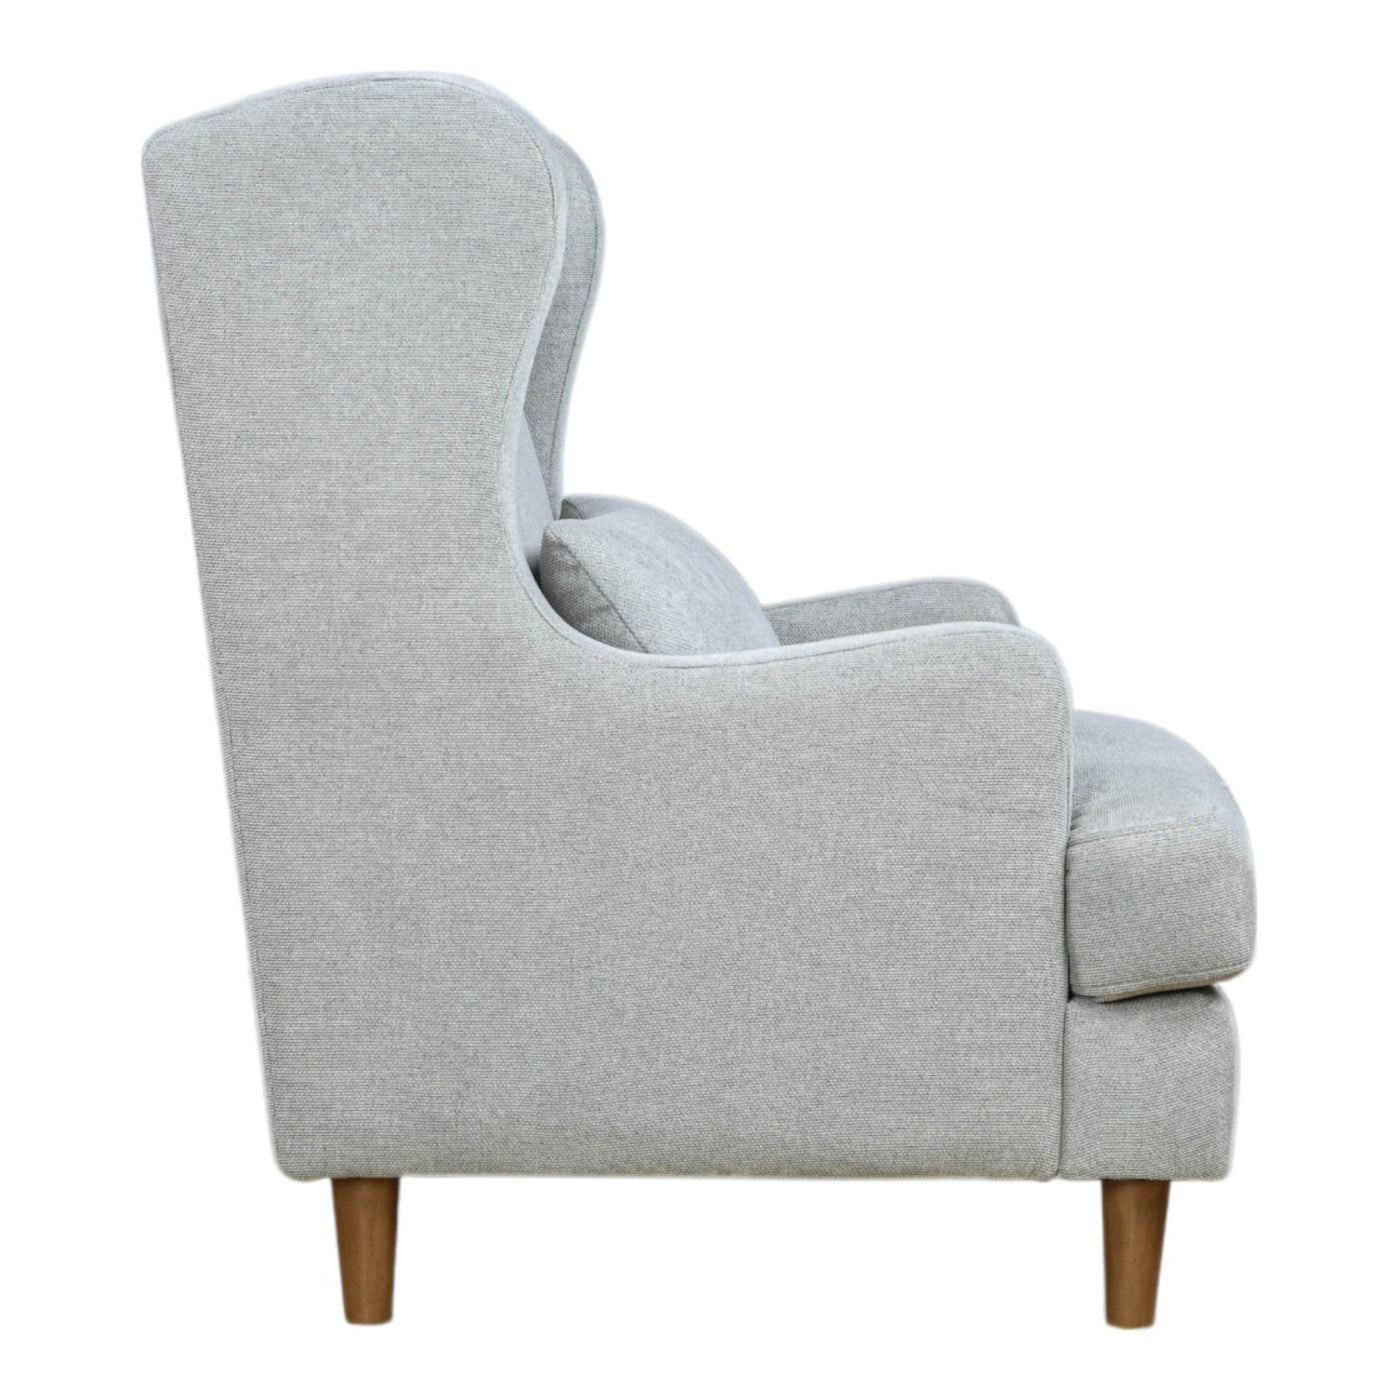 Monarchy Chair Light Grey